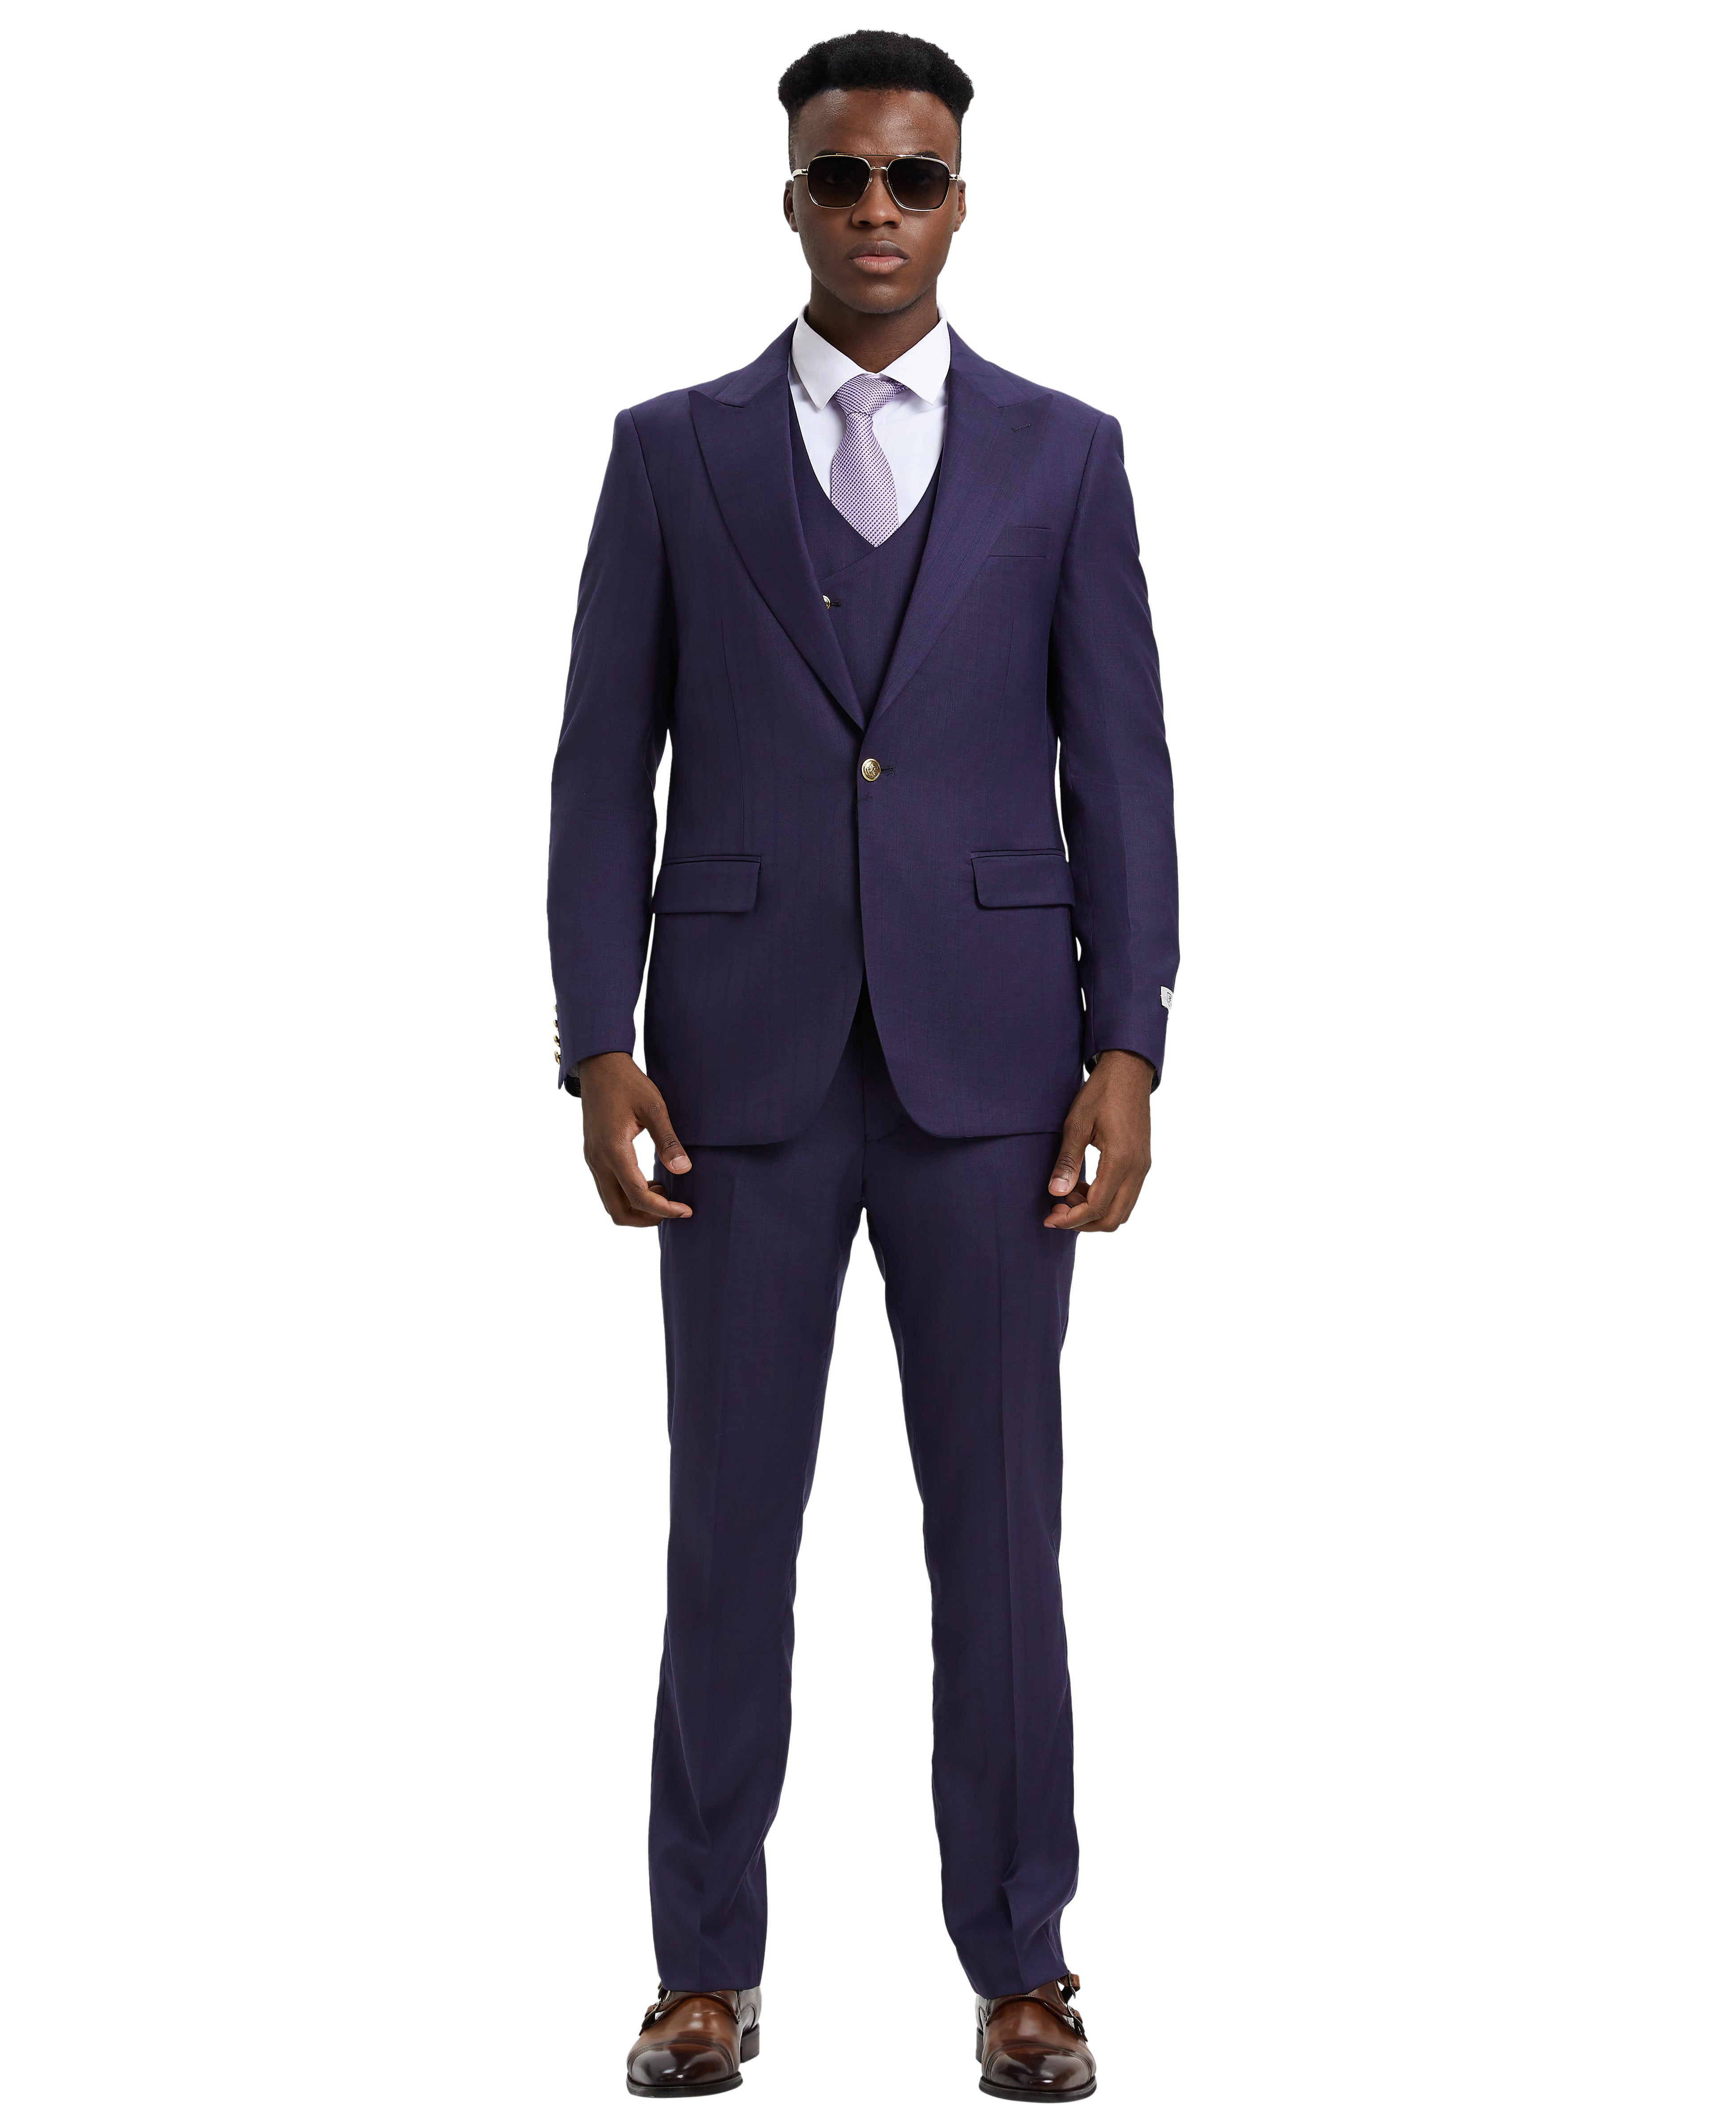 Stacy Adams Hybrid-Fit Suit w/ Double Breasted Vest, Purple